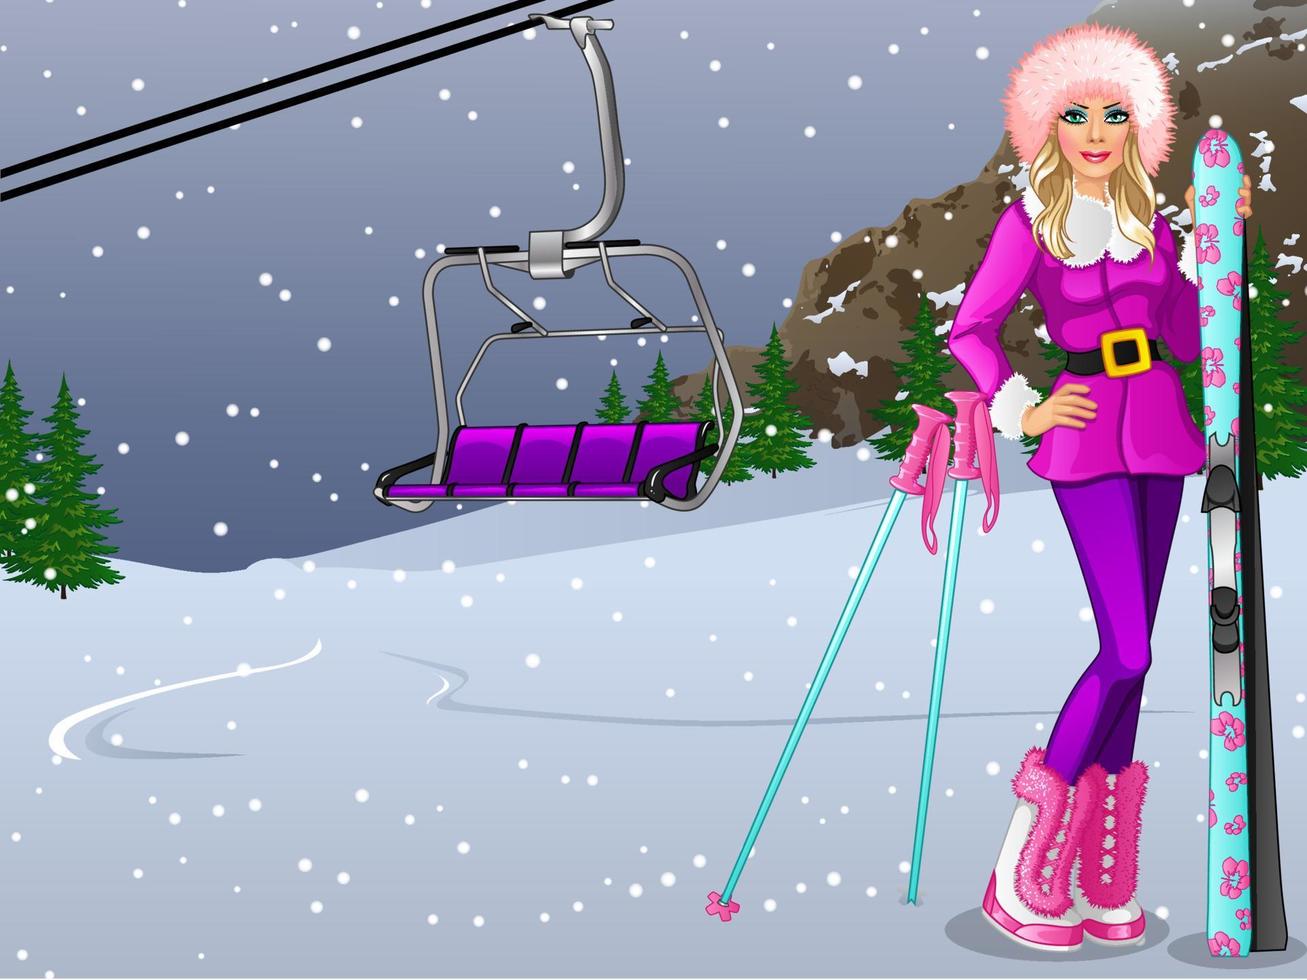 Cartoon Girl goes Skiing on Mountain Slope Background Scene. Vector Illustration